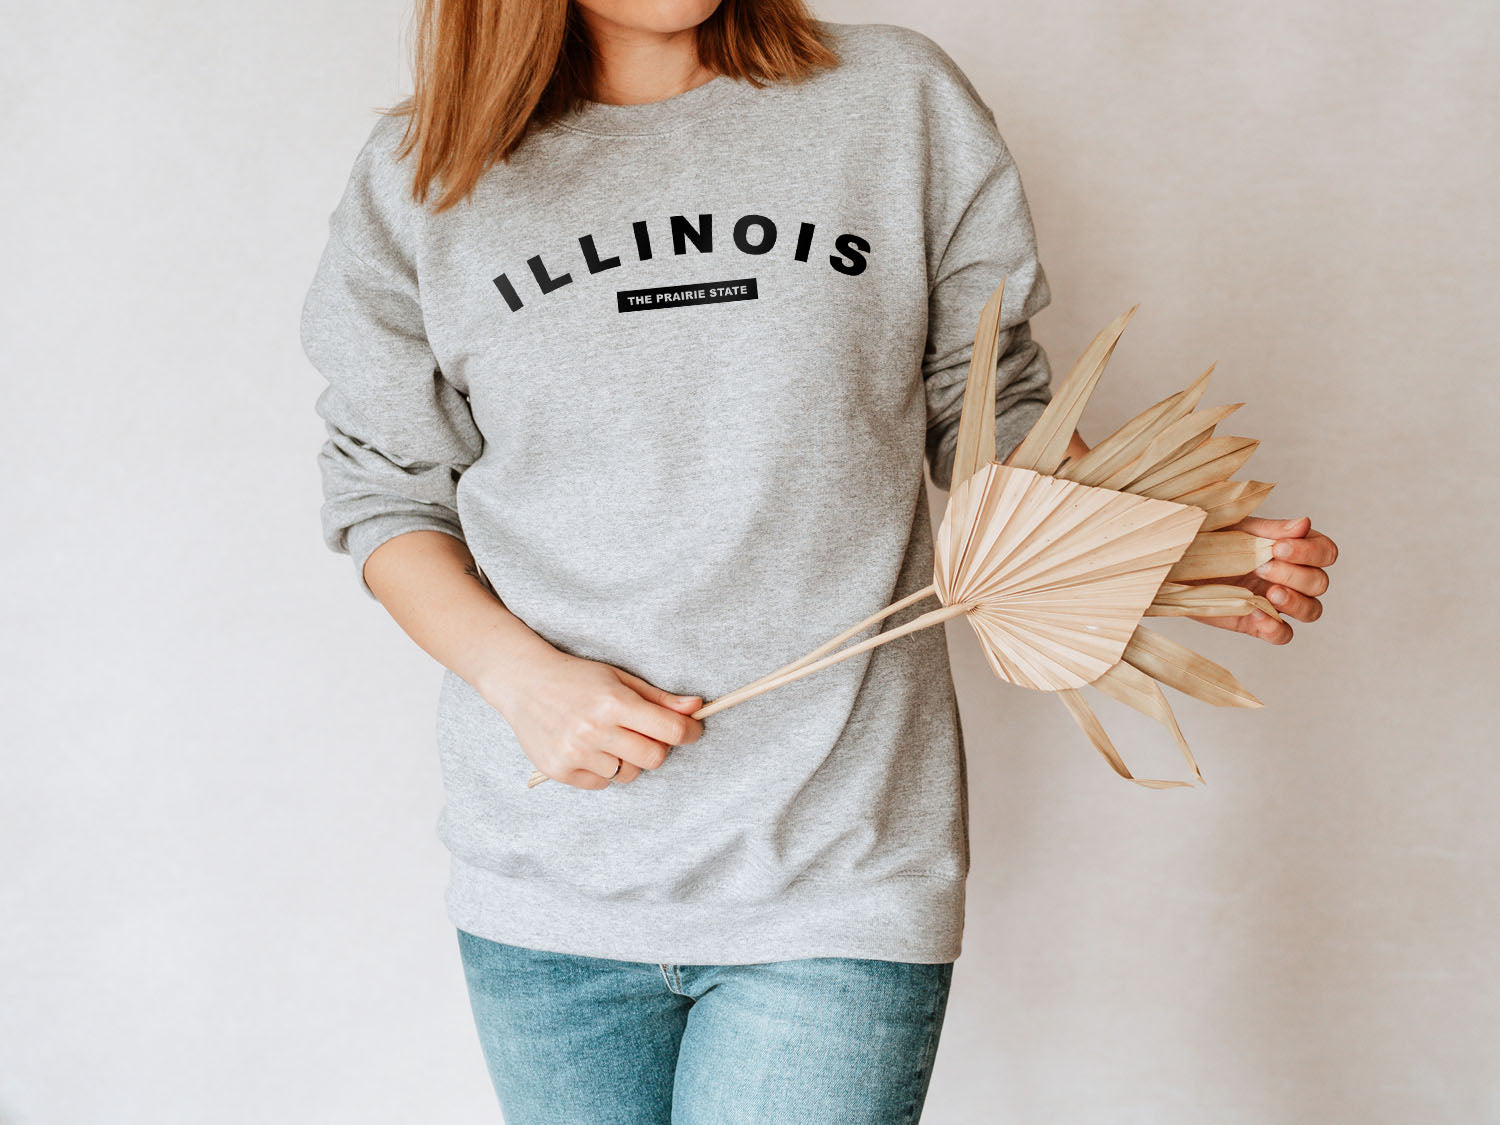 Illinois The Prairie State Sweatshirt - United States Name & Slogan Minimal Design Printed Sweatshirt